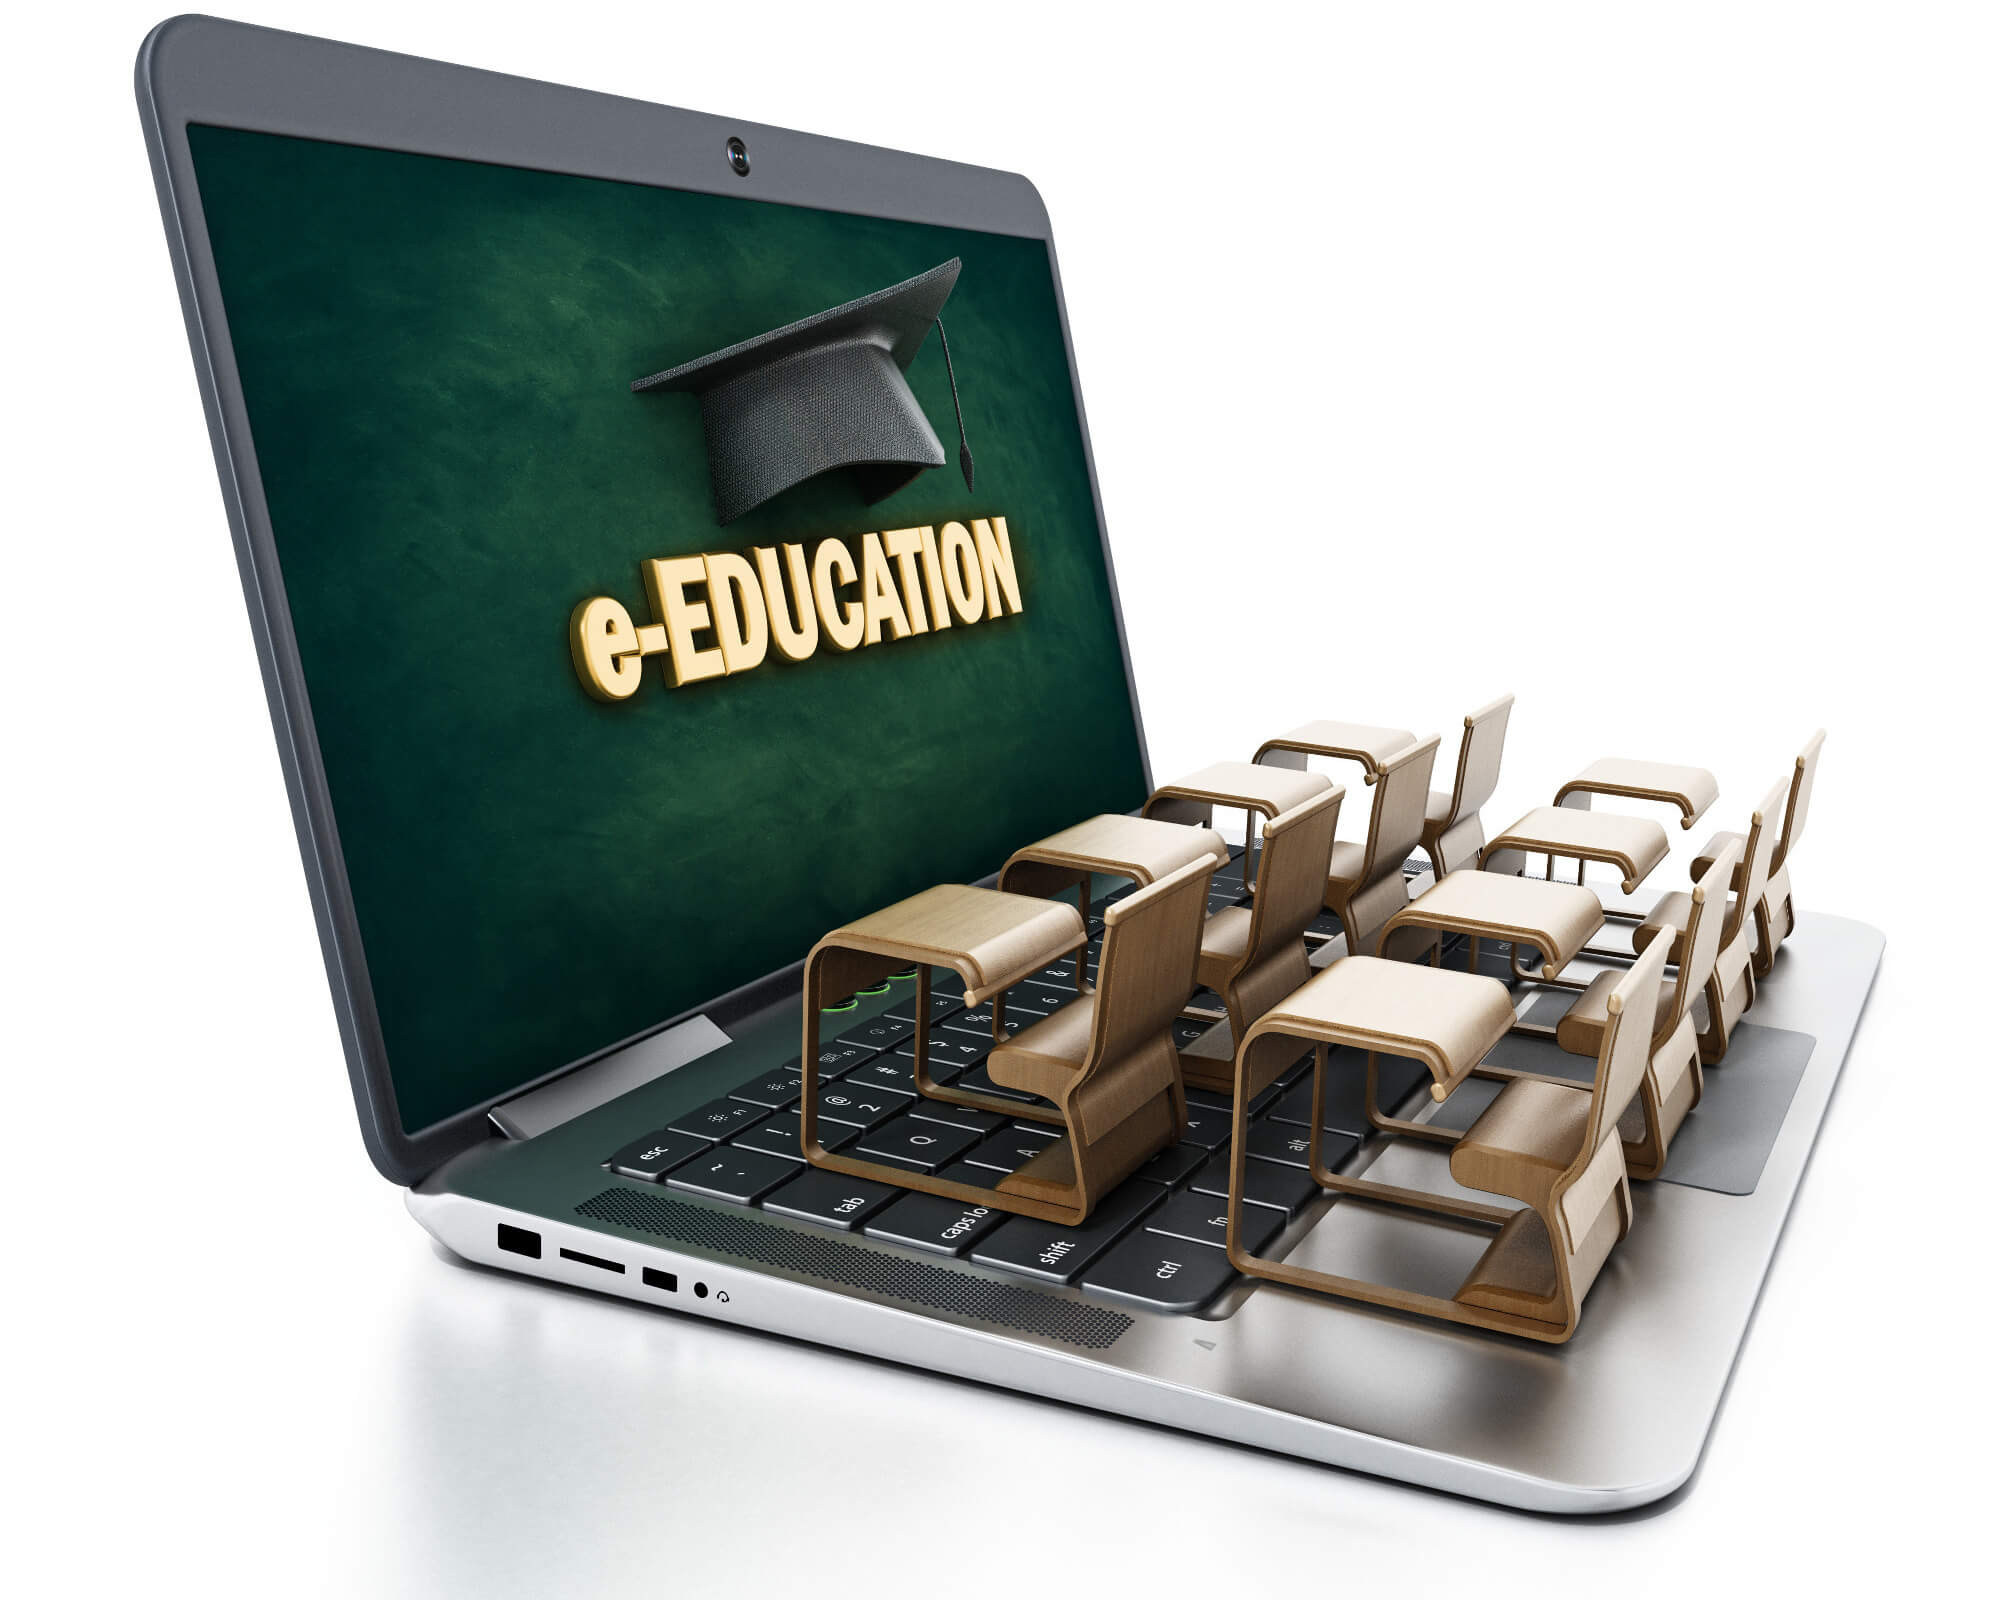 e-Education - student desks on laptop computer keyboard  